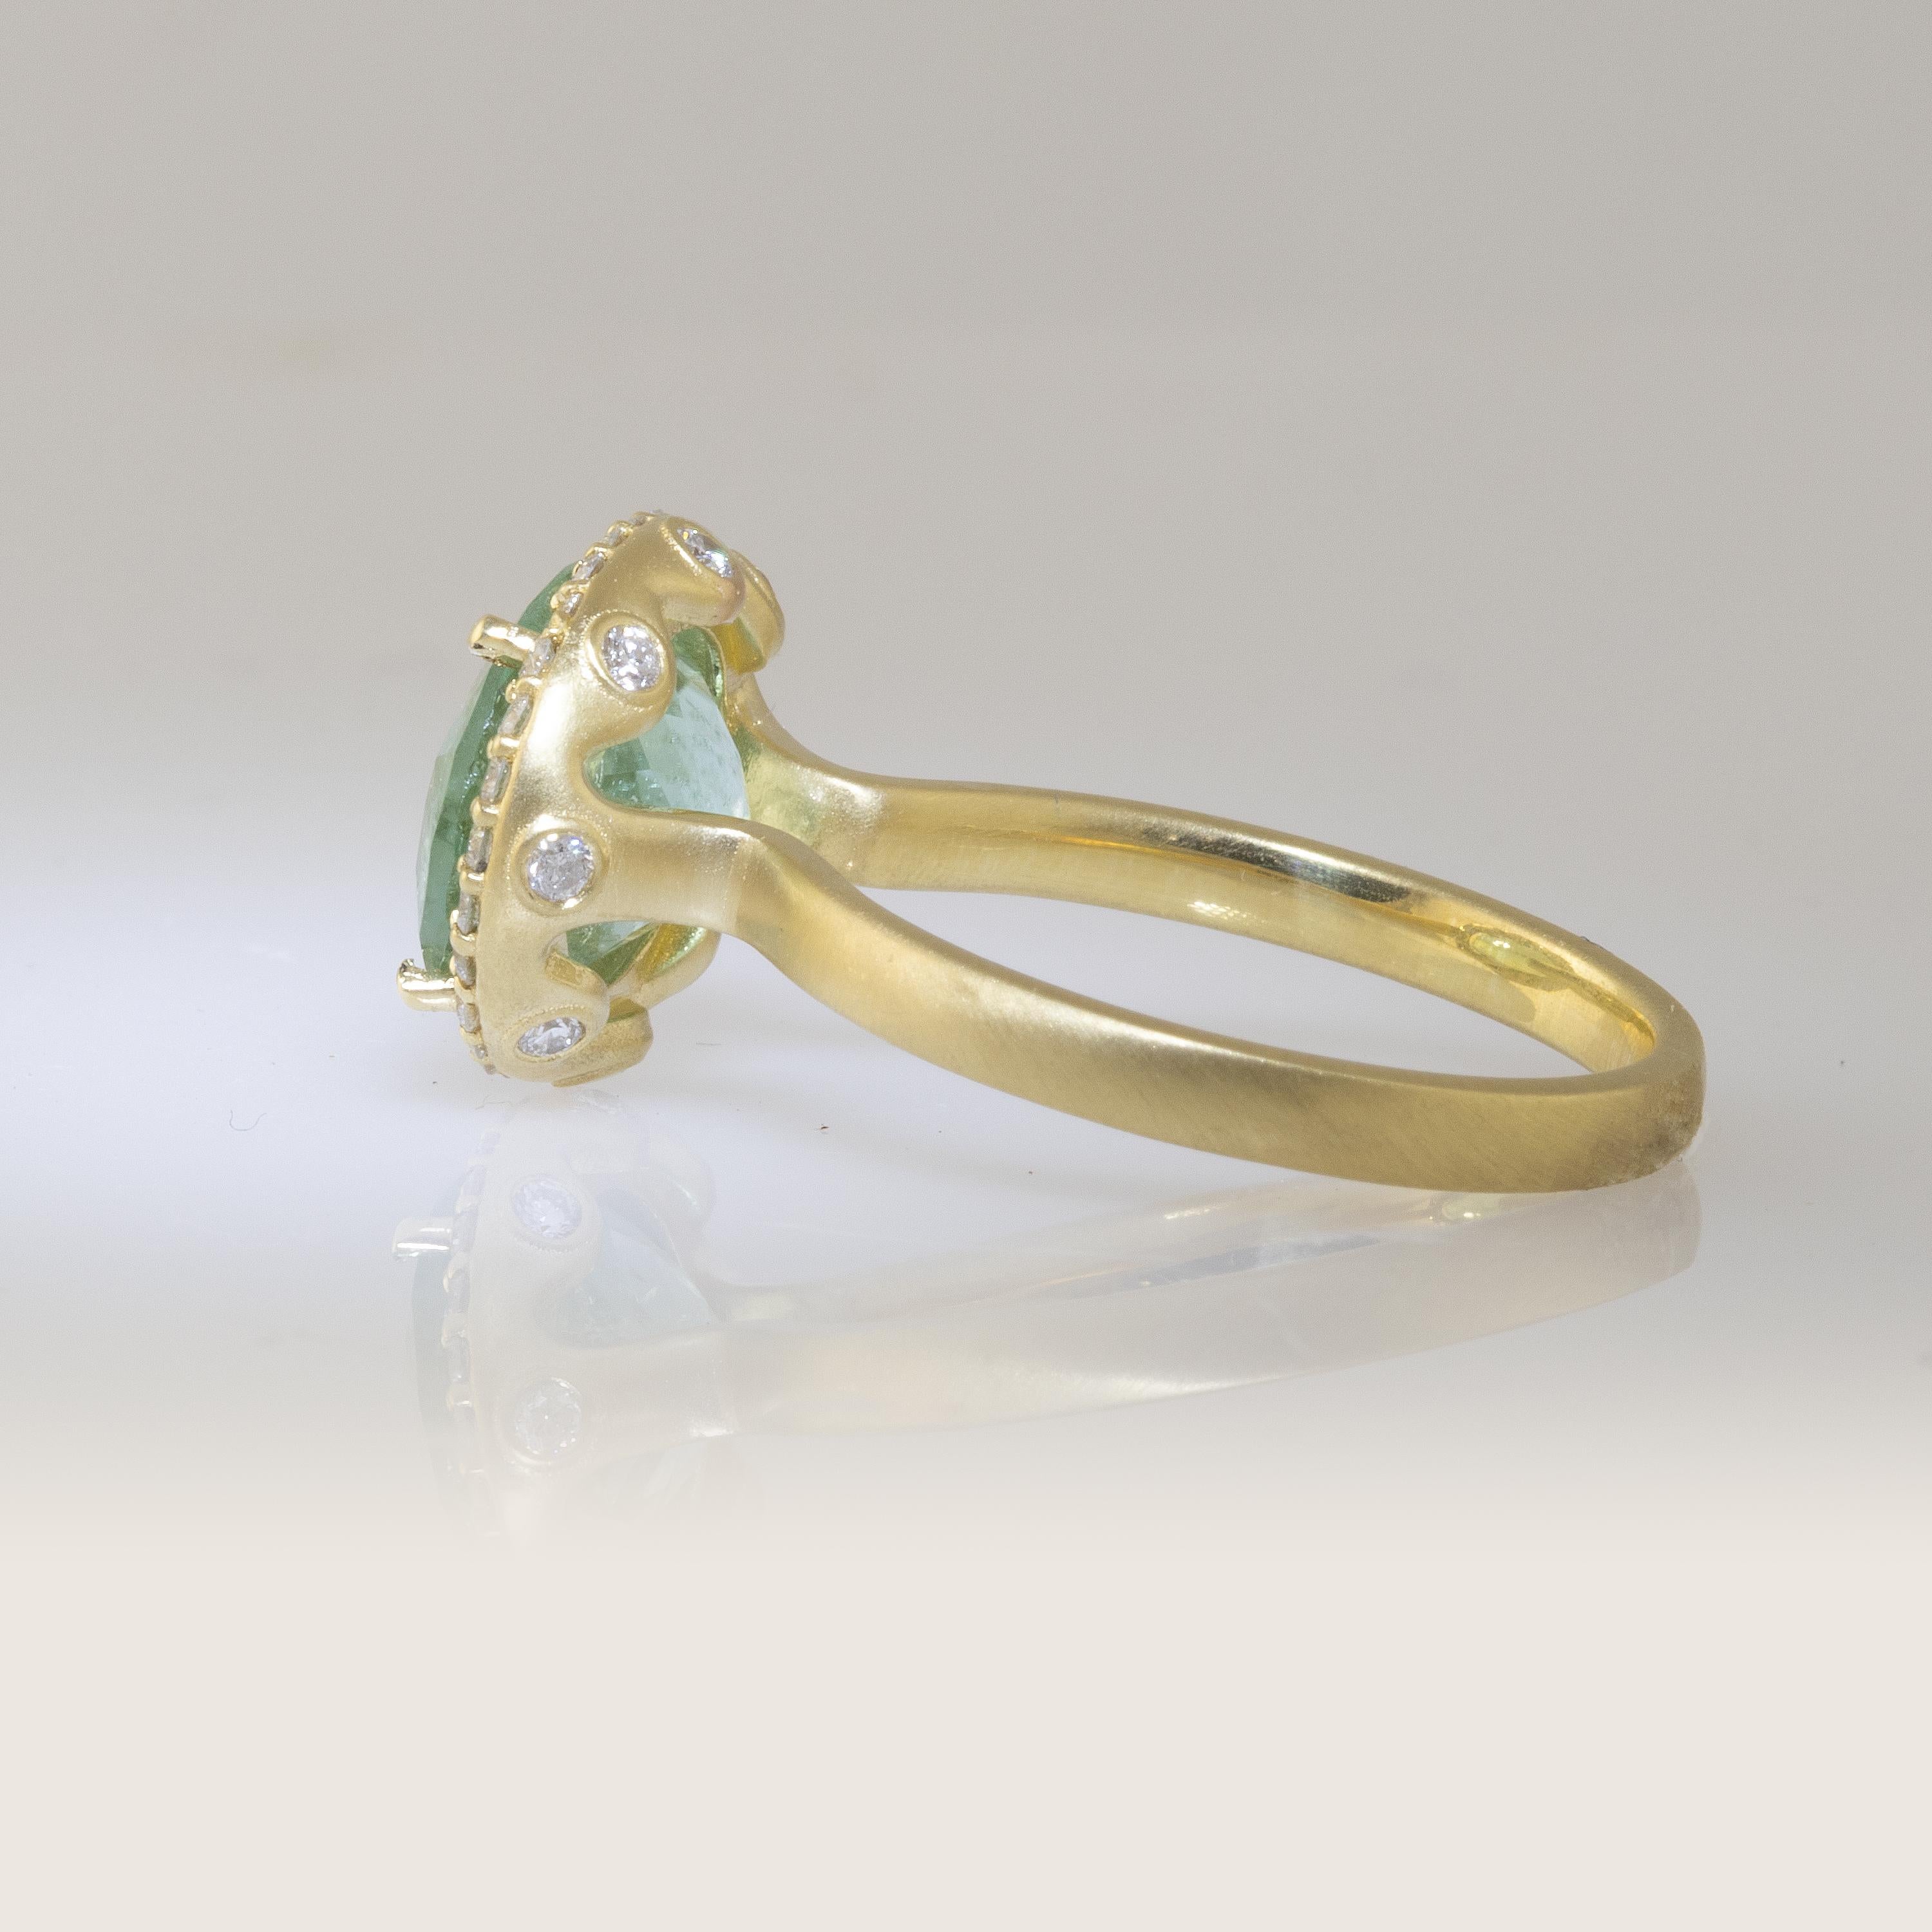 Artisan Ico & the Bird Fine Jewelry 4.29 carat Mint Tourmaline Diamond Gold Ring For Sale